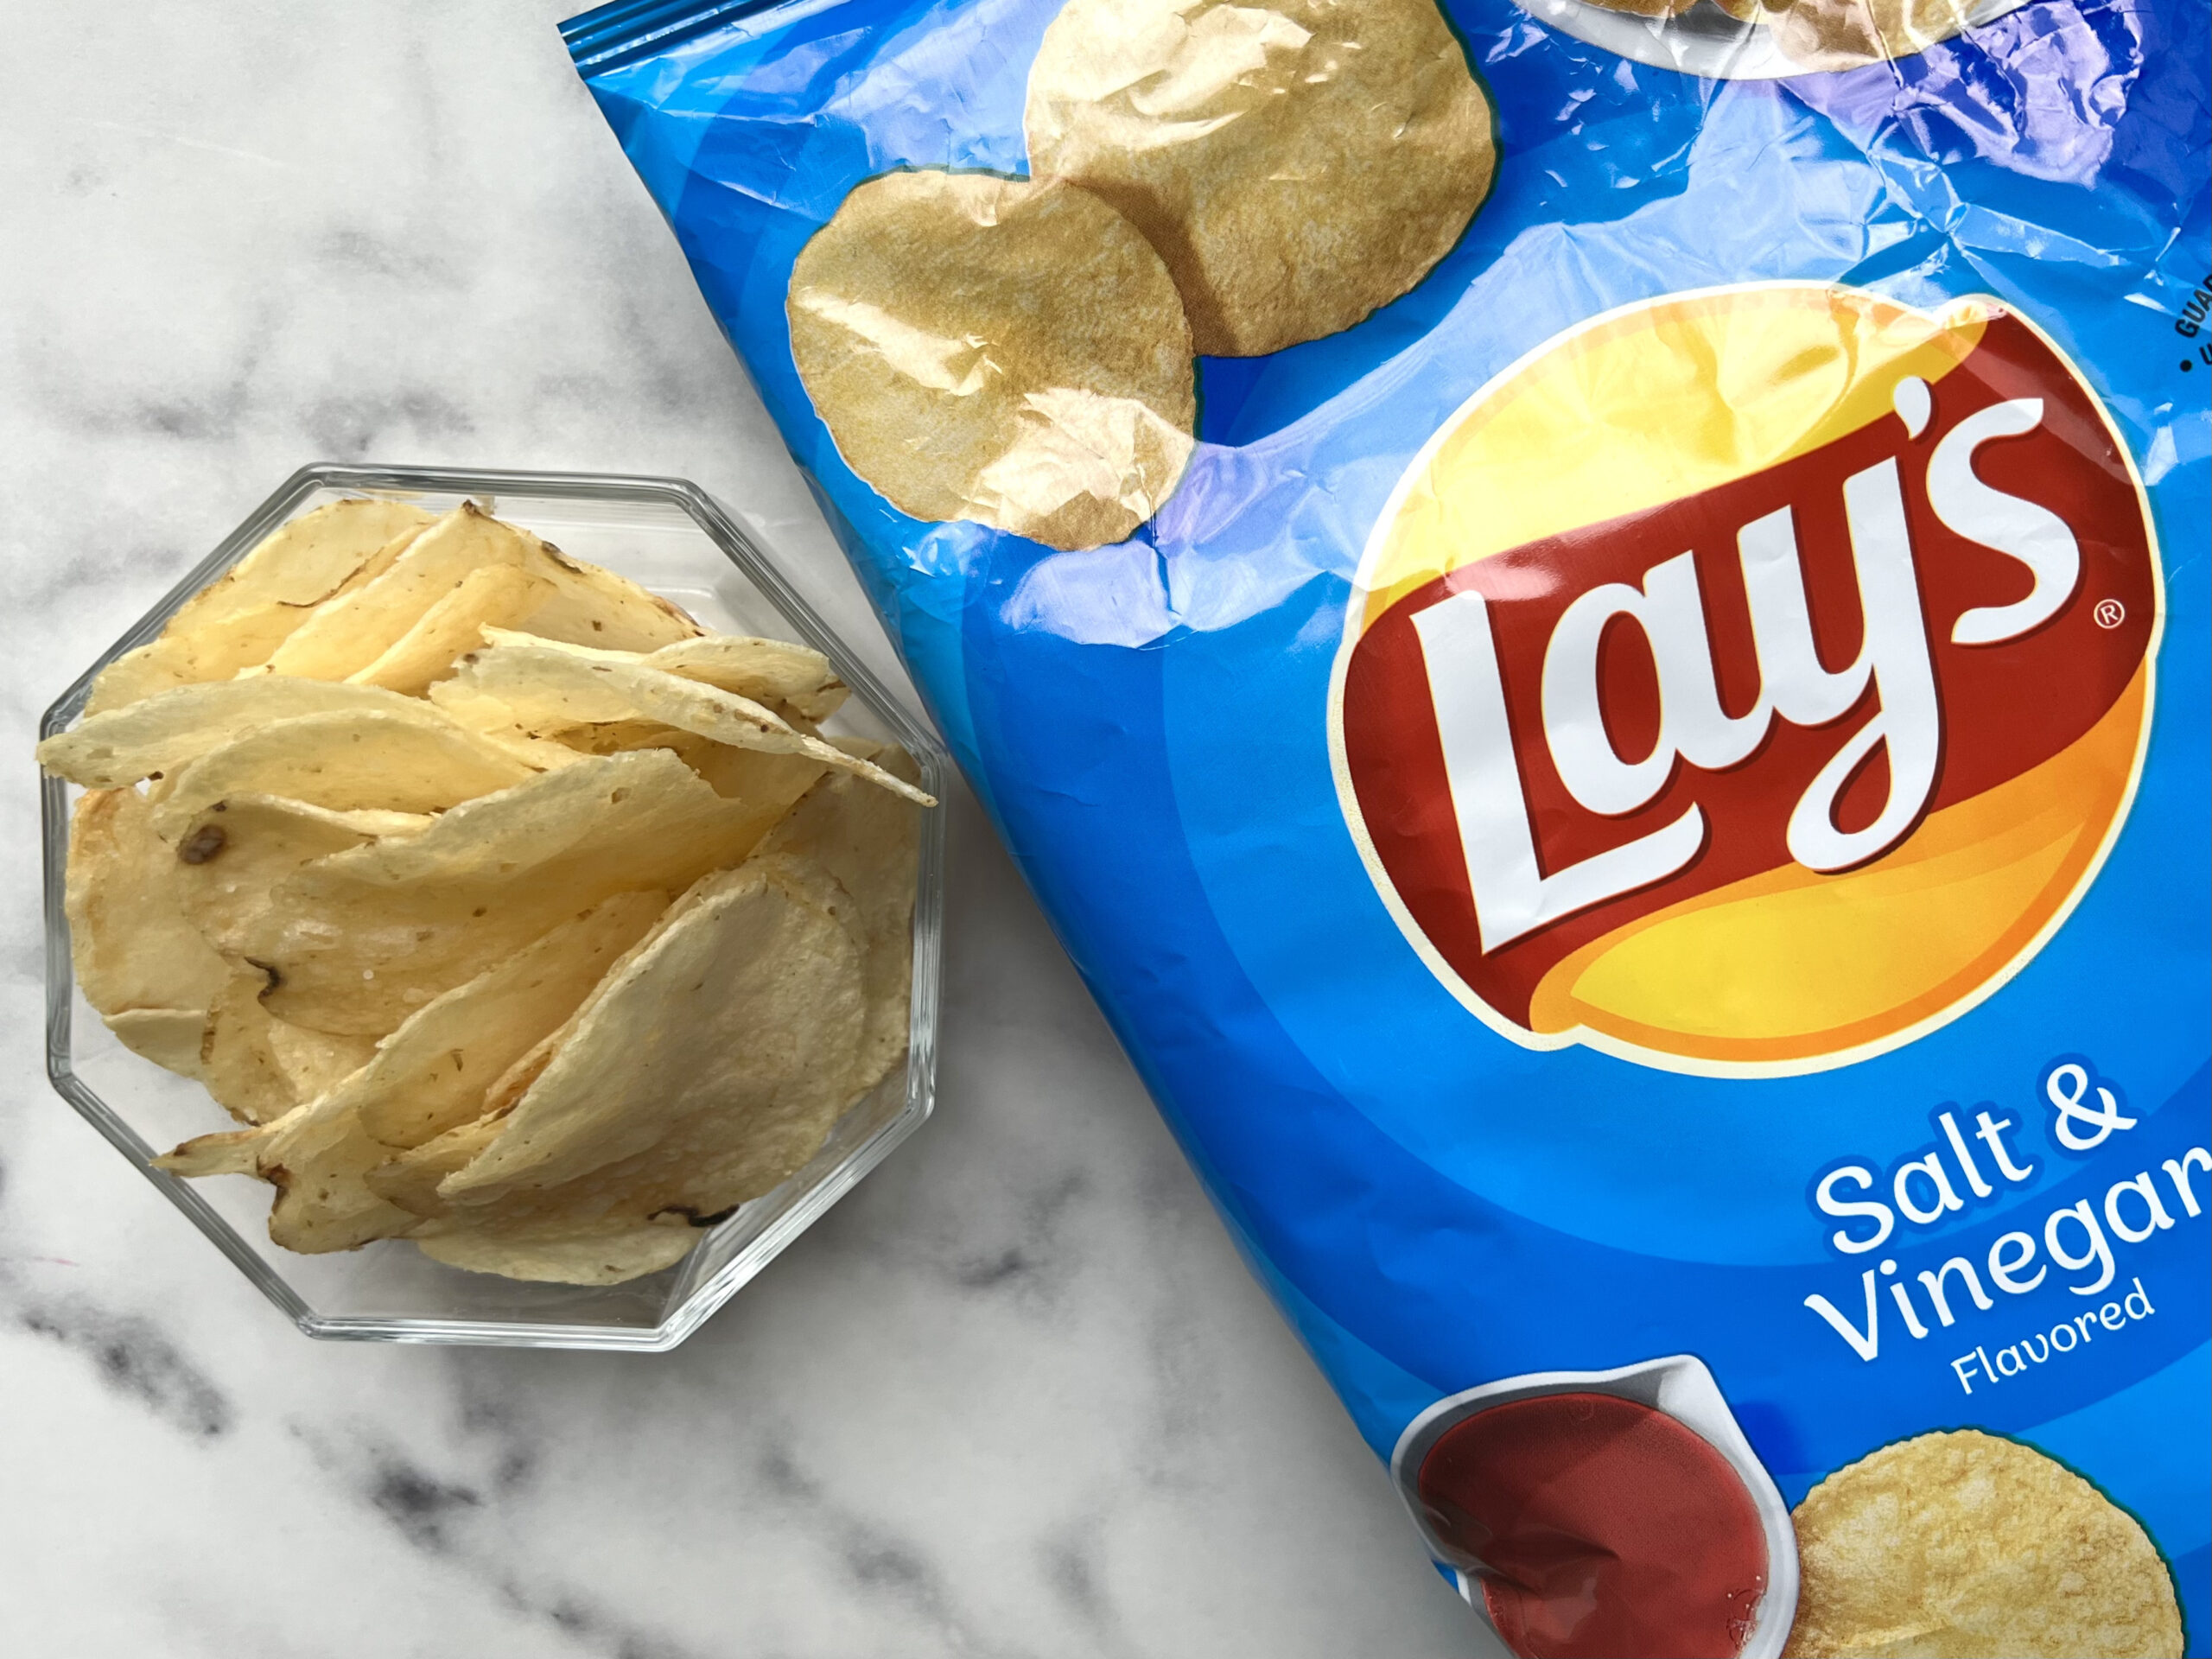 Great Value Burnin' Hot Flavored Potato Chips, 7.75 oz